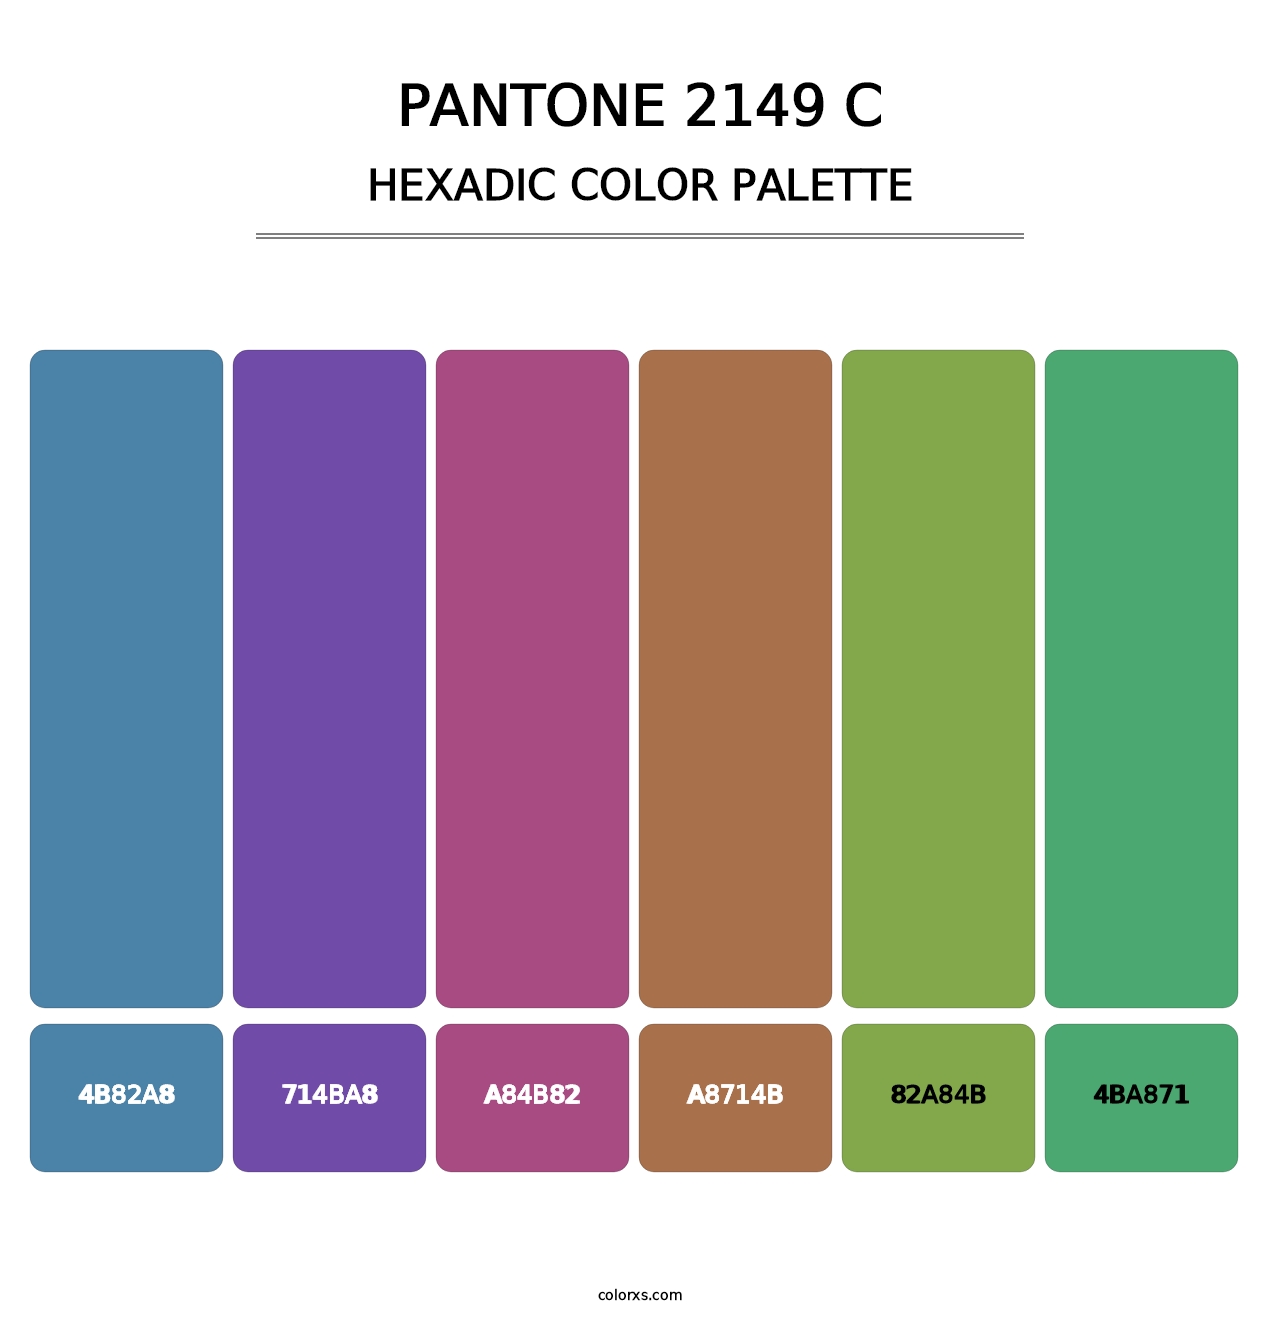 PANTONE 2149 C - Hexadic Color Palette